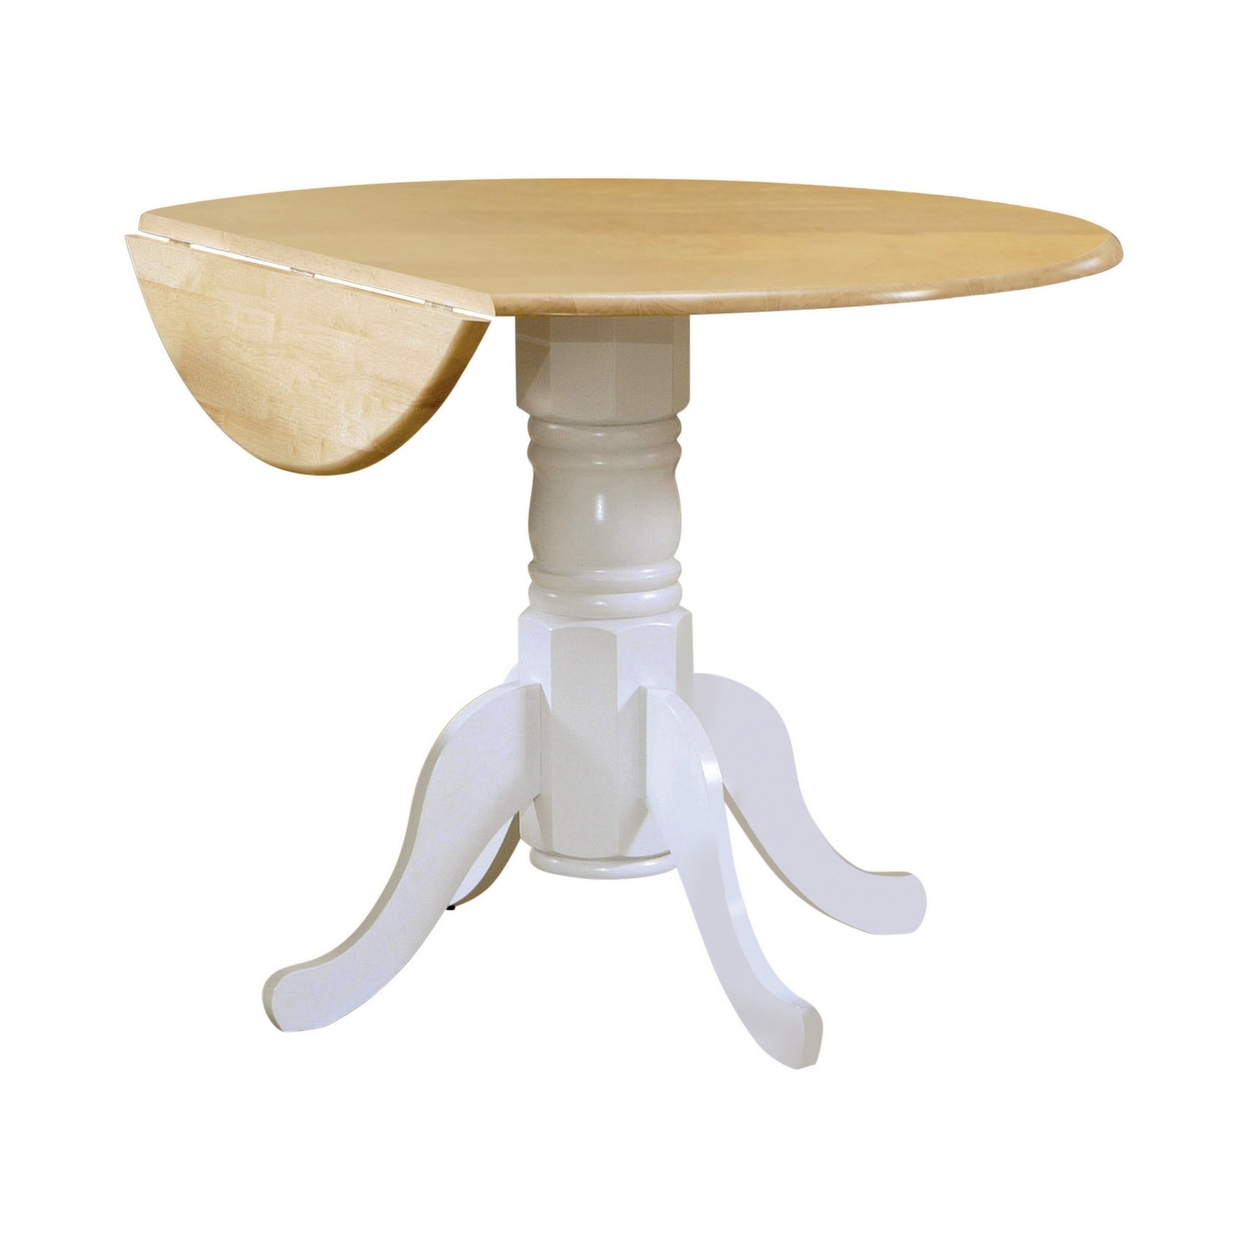 Giva 40 Inch Round Drop Leaf Dining Table, Brown Top, White Pedestal Base- Saltoro Sherpi